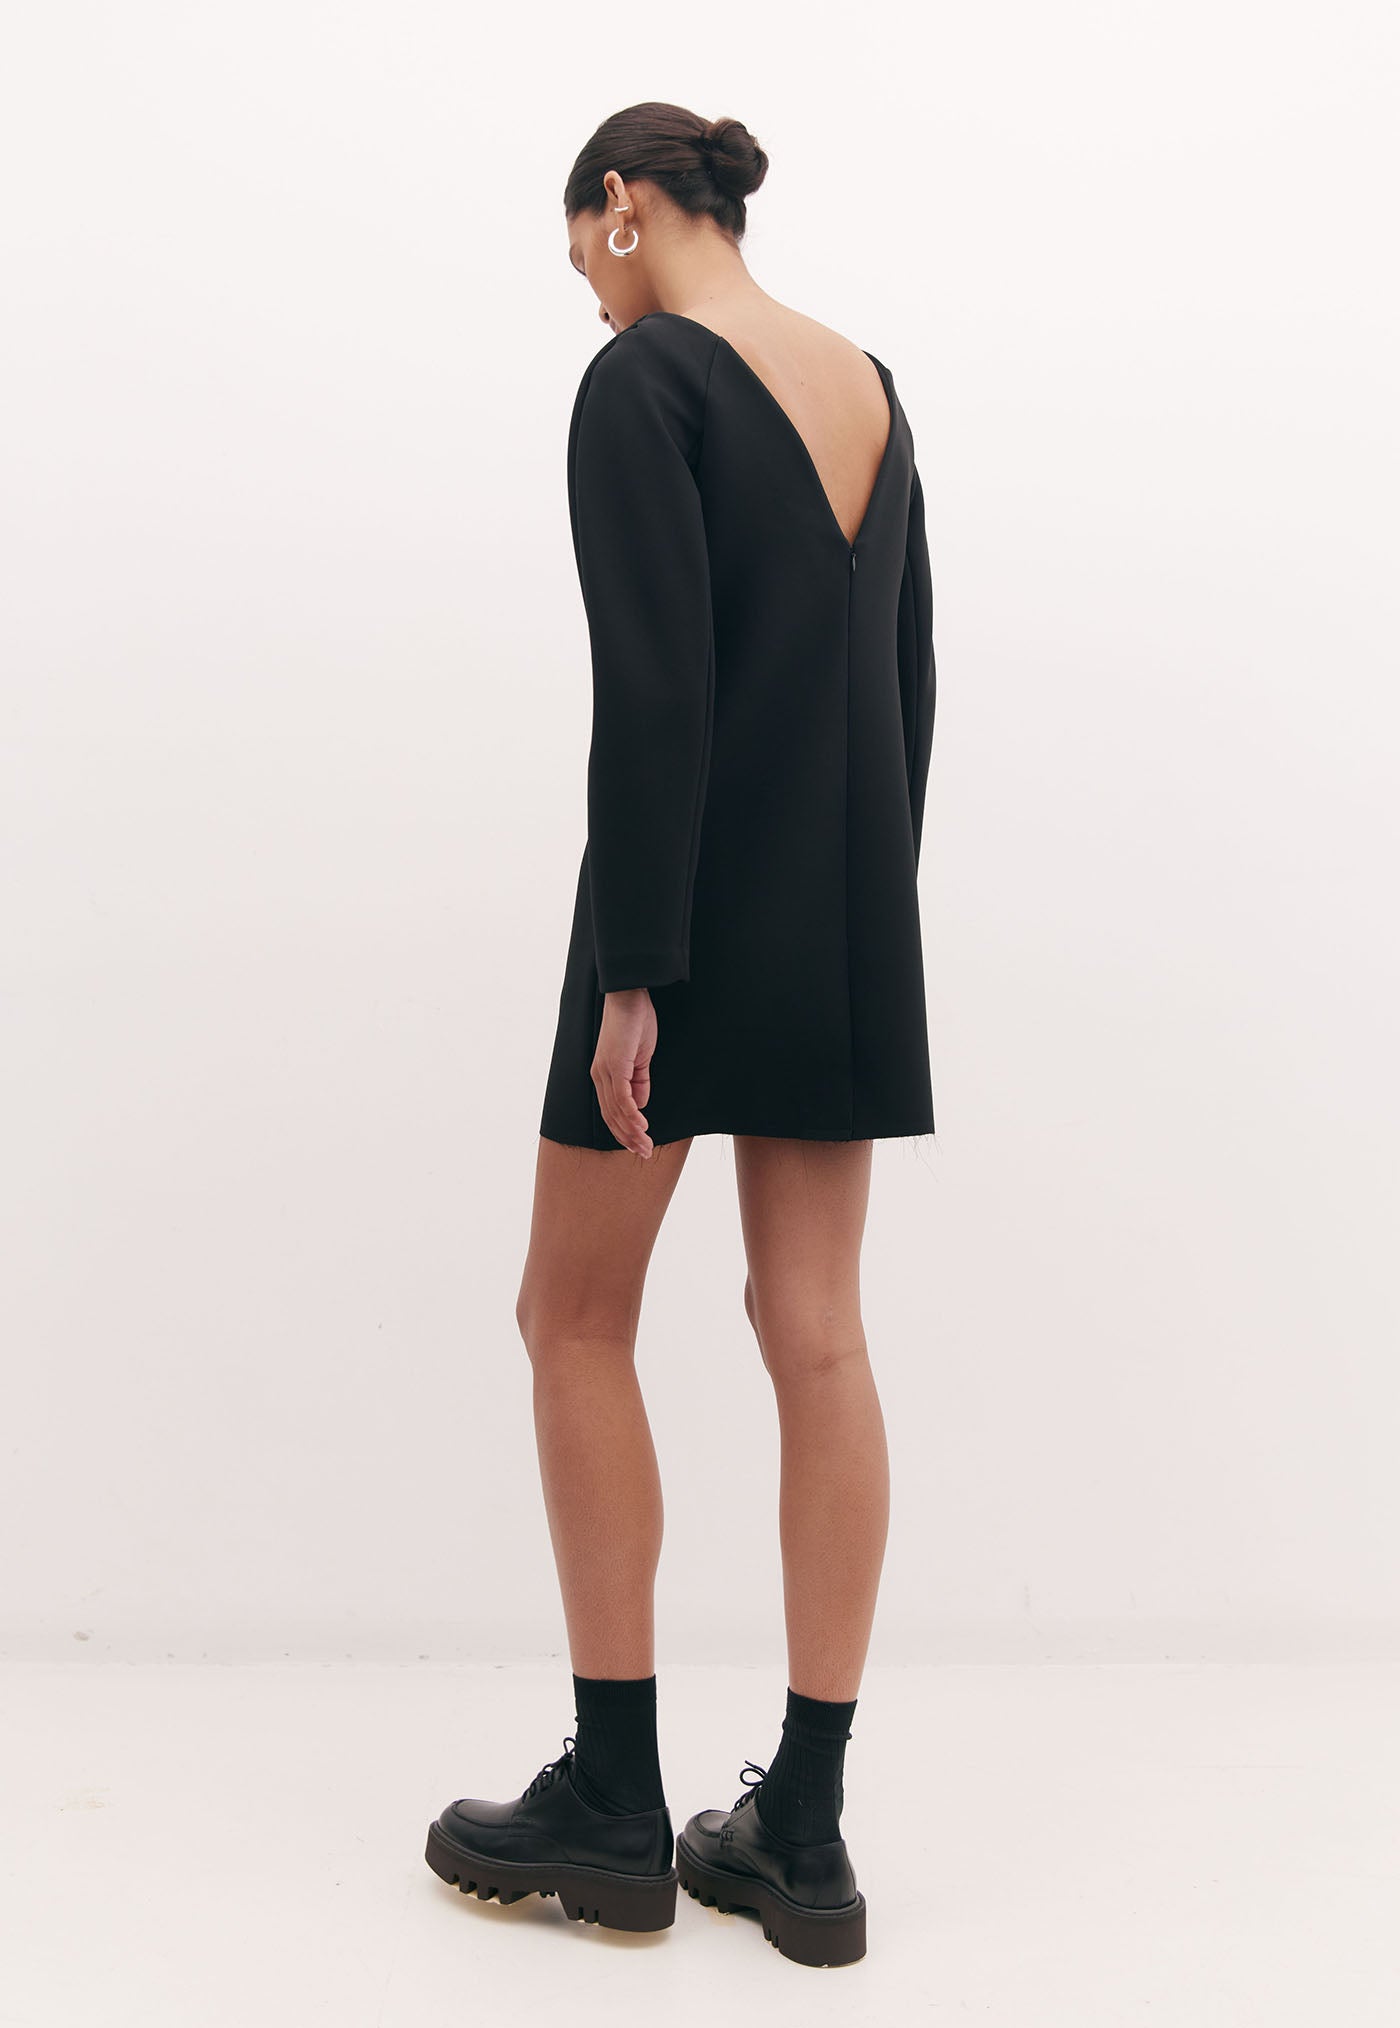 Mikkel Mini Dress - Black sold by Angel Divine